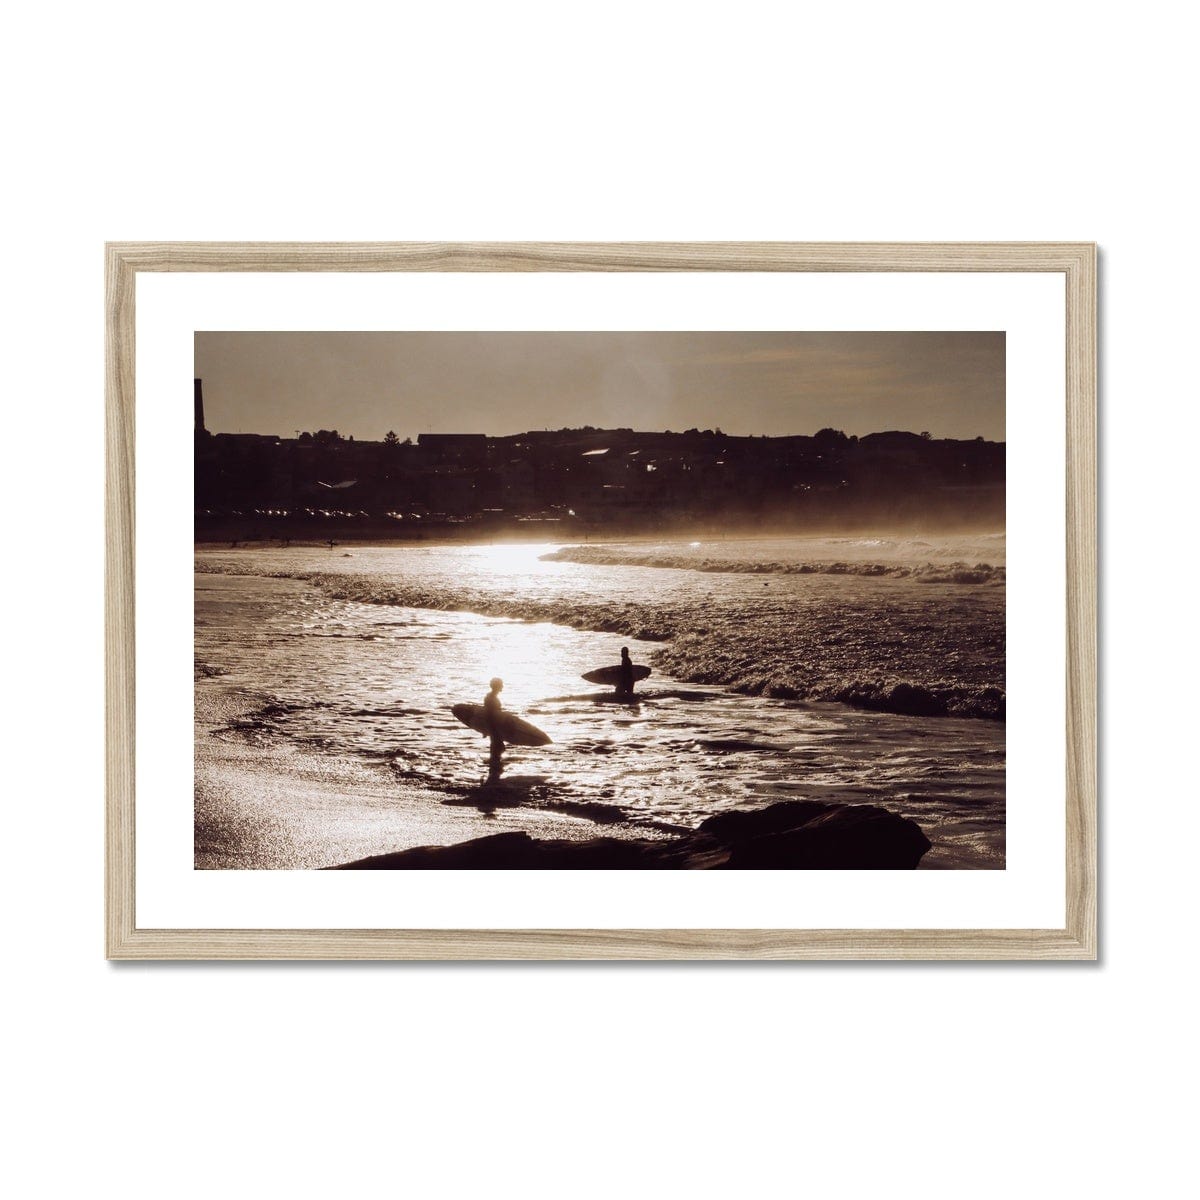 Adam Davies Framed A4 Landscape / Natural Frame Ready To Surf Framed Print